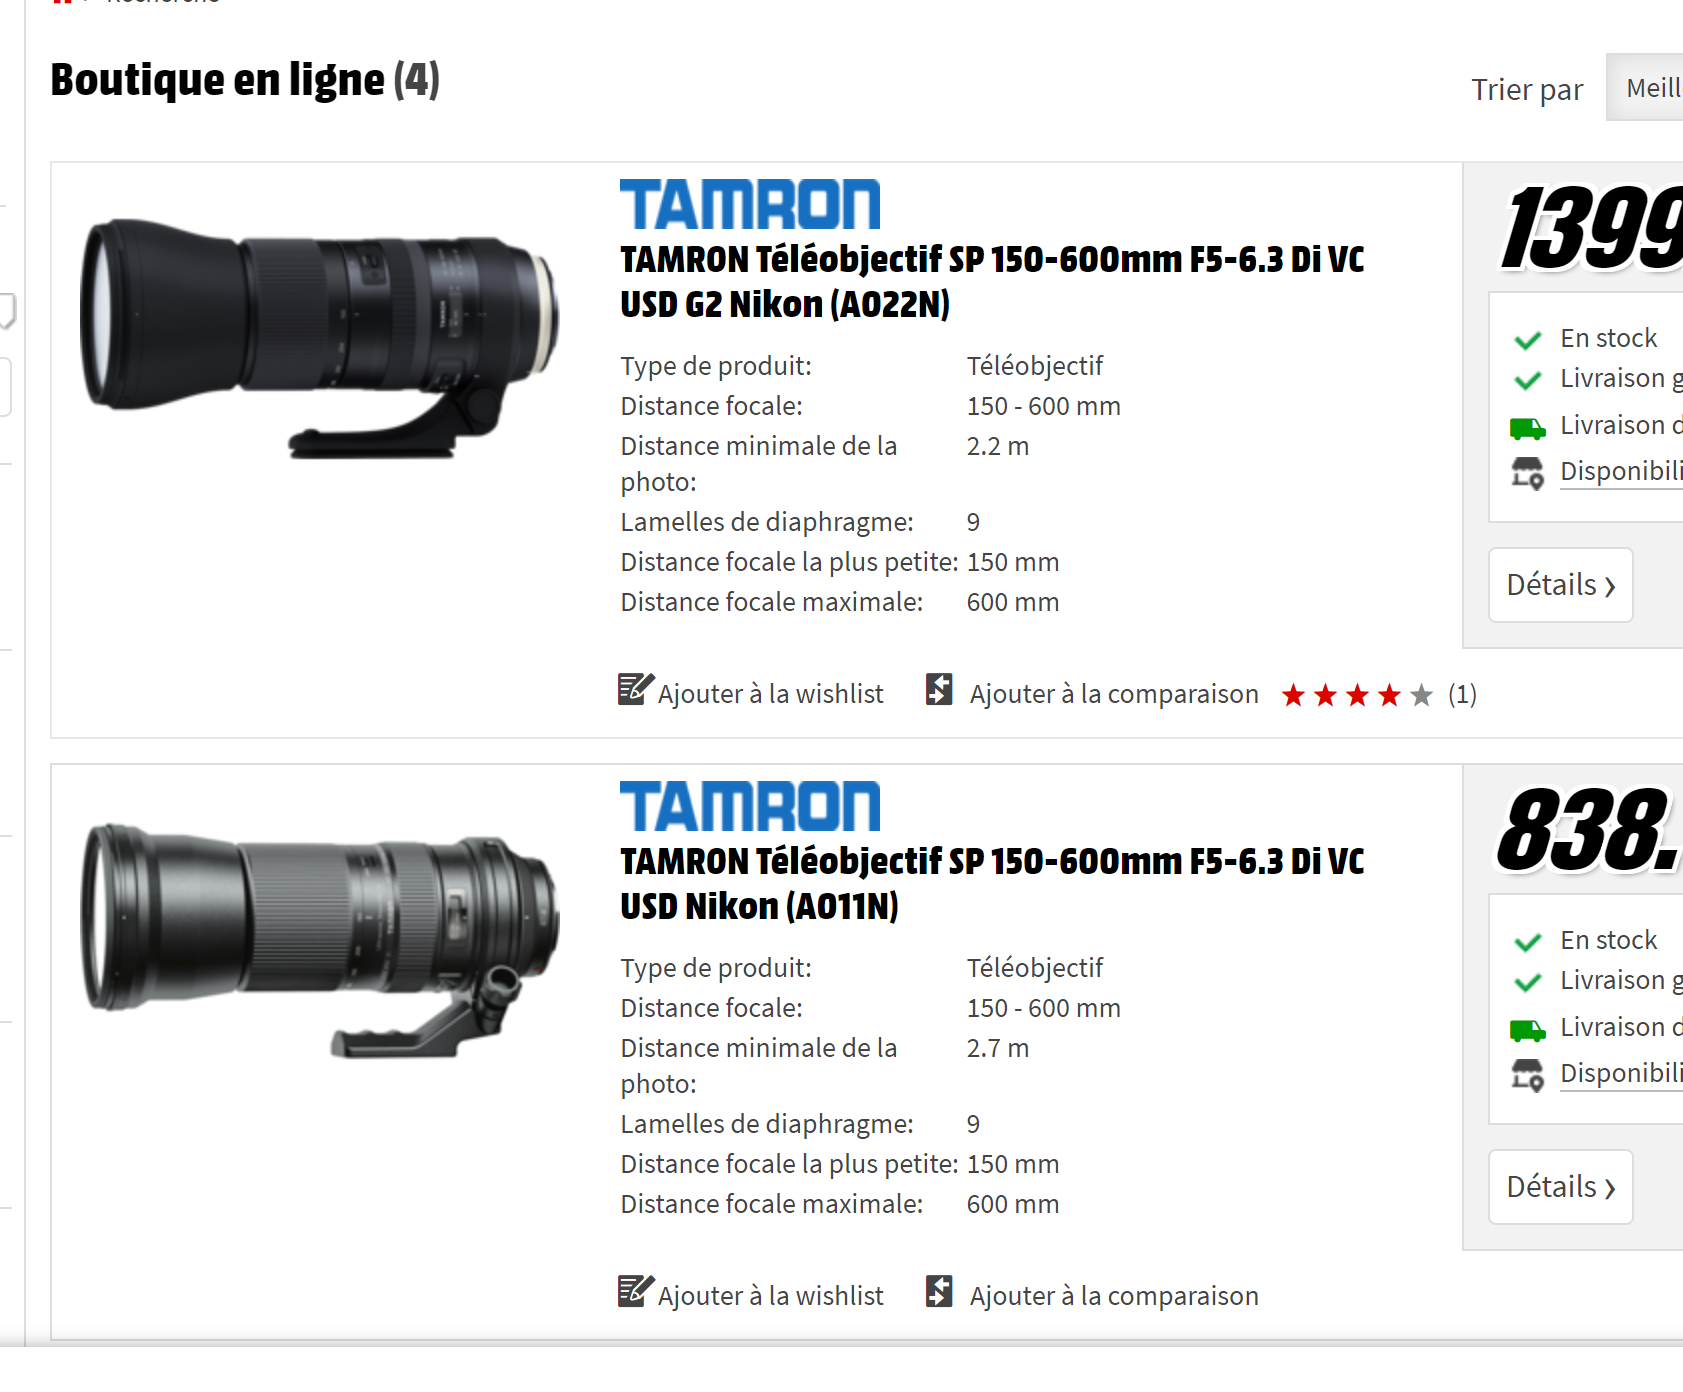 Nikon D5600 - Tamron sp150-600 f5.6/6.3 di vc usd G1 or G2